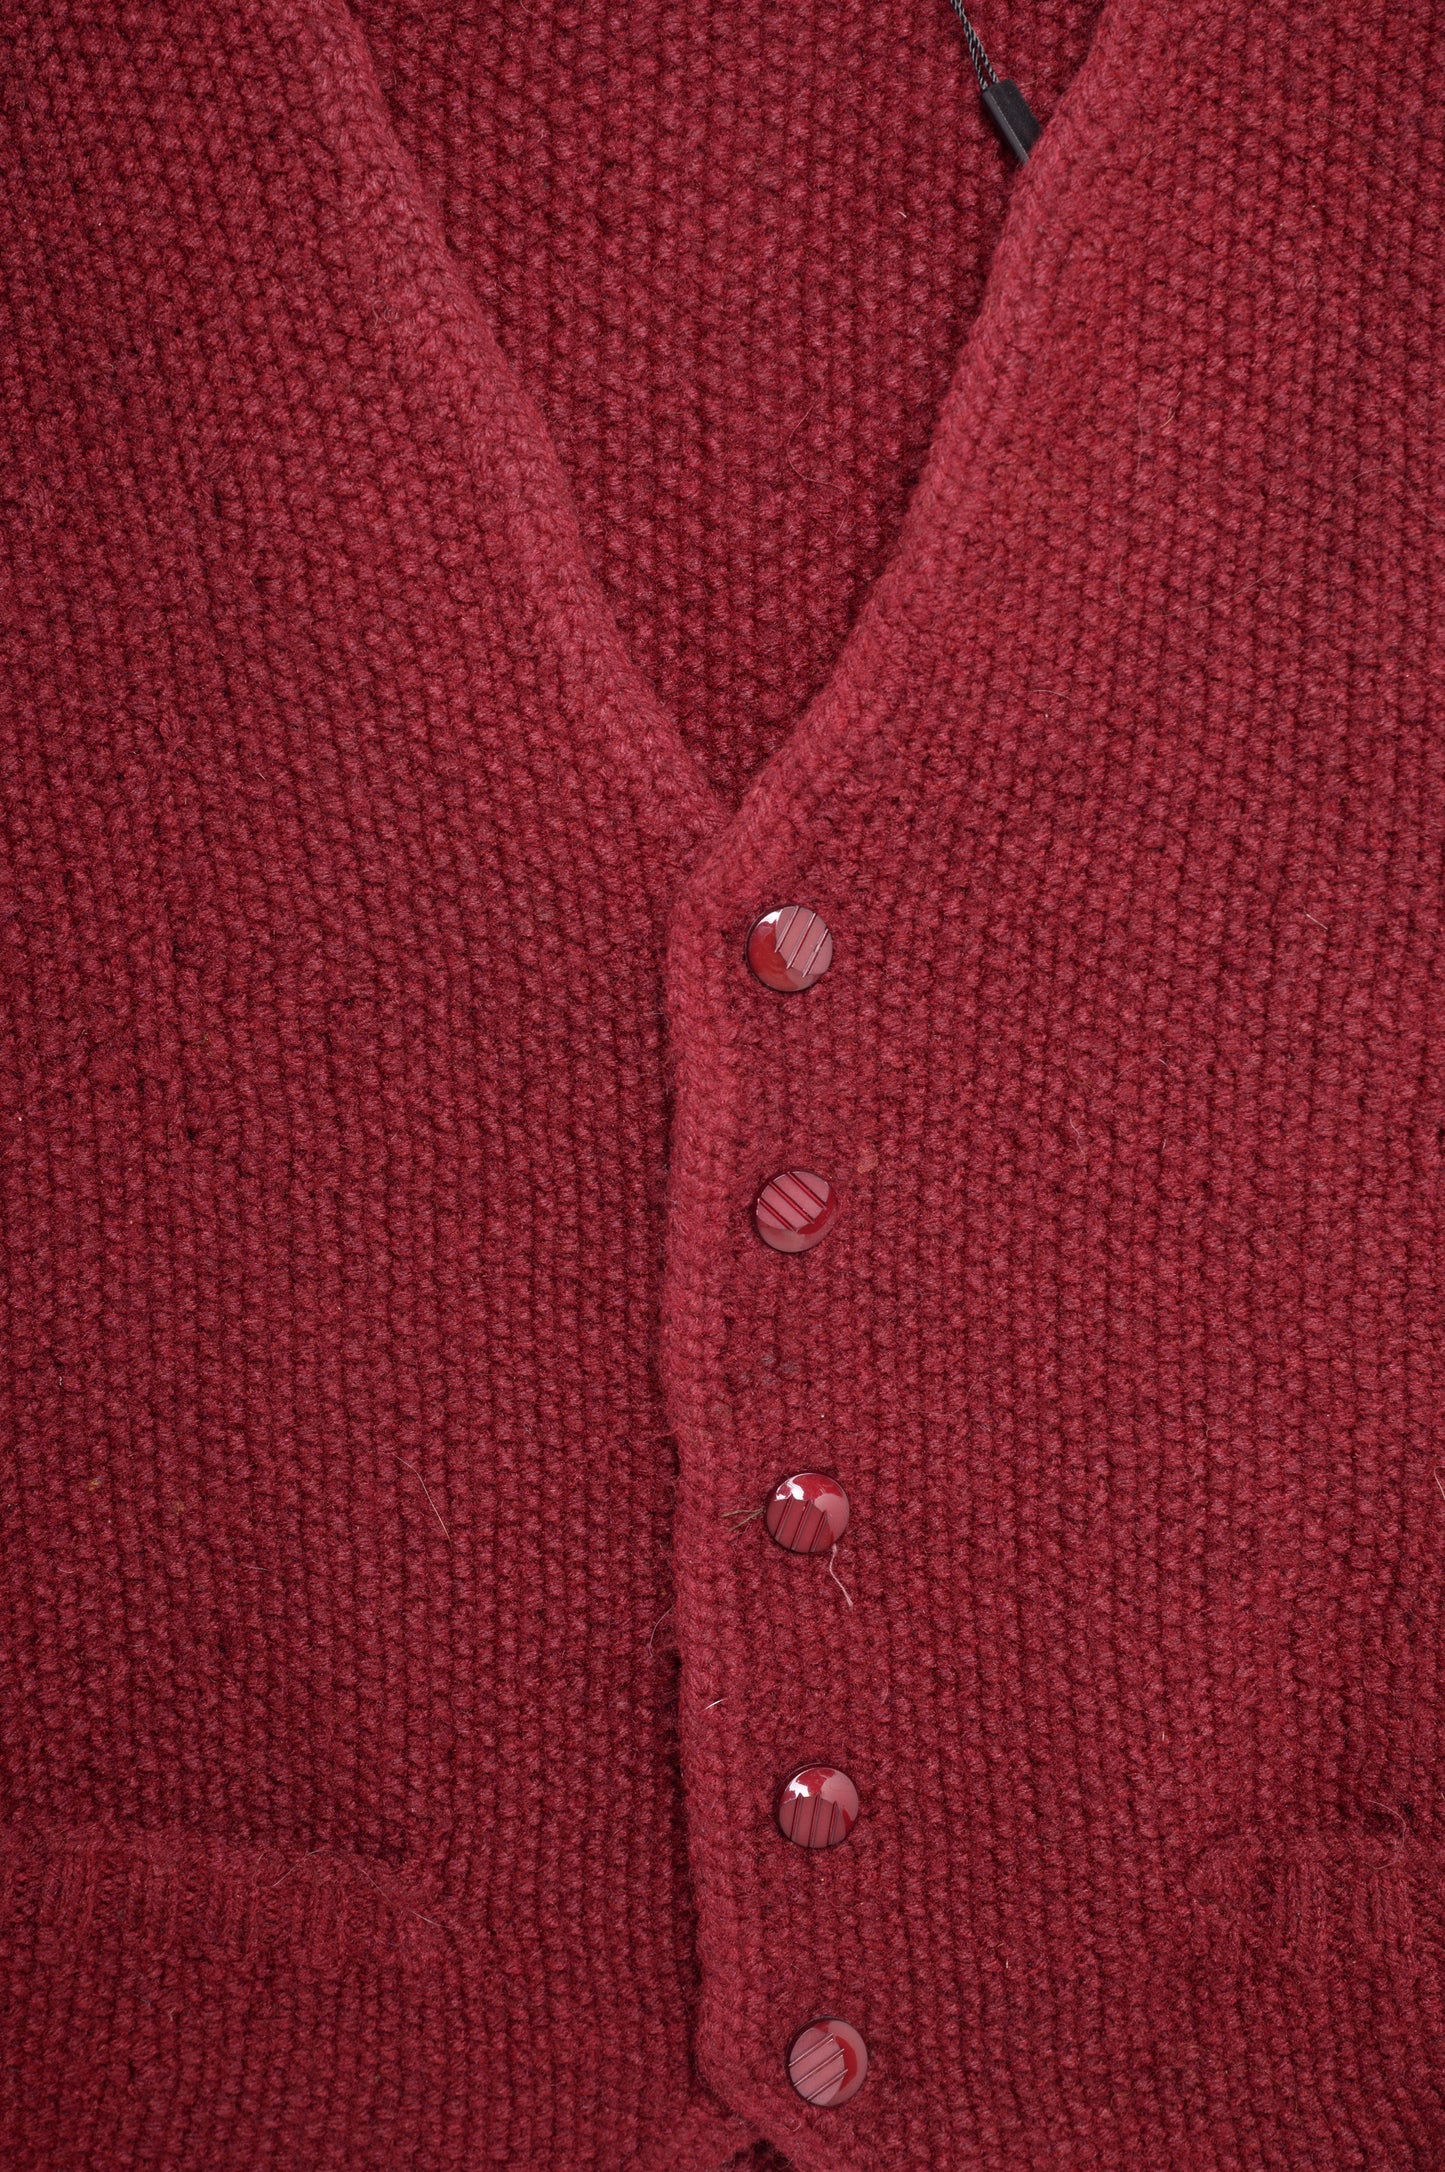 1960s Hand Knit Sweater Vest